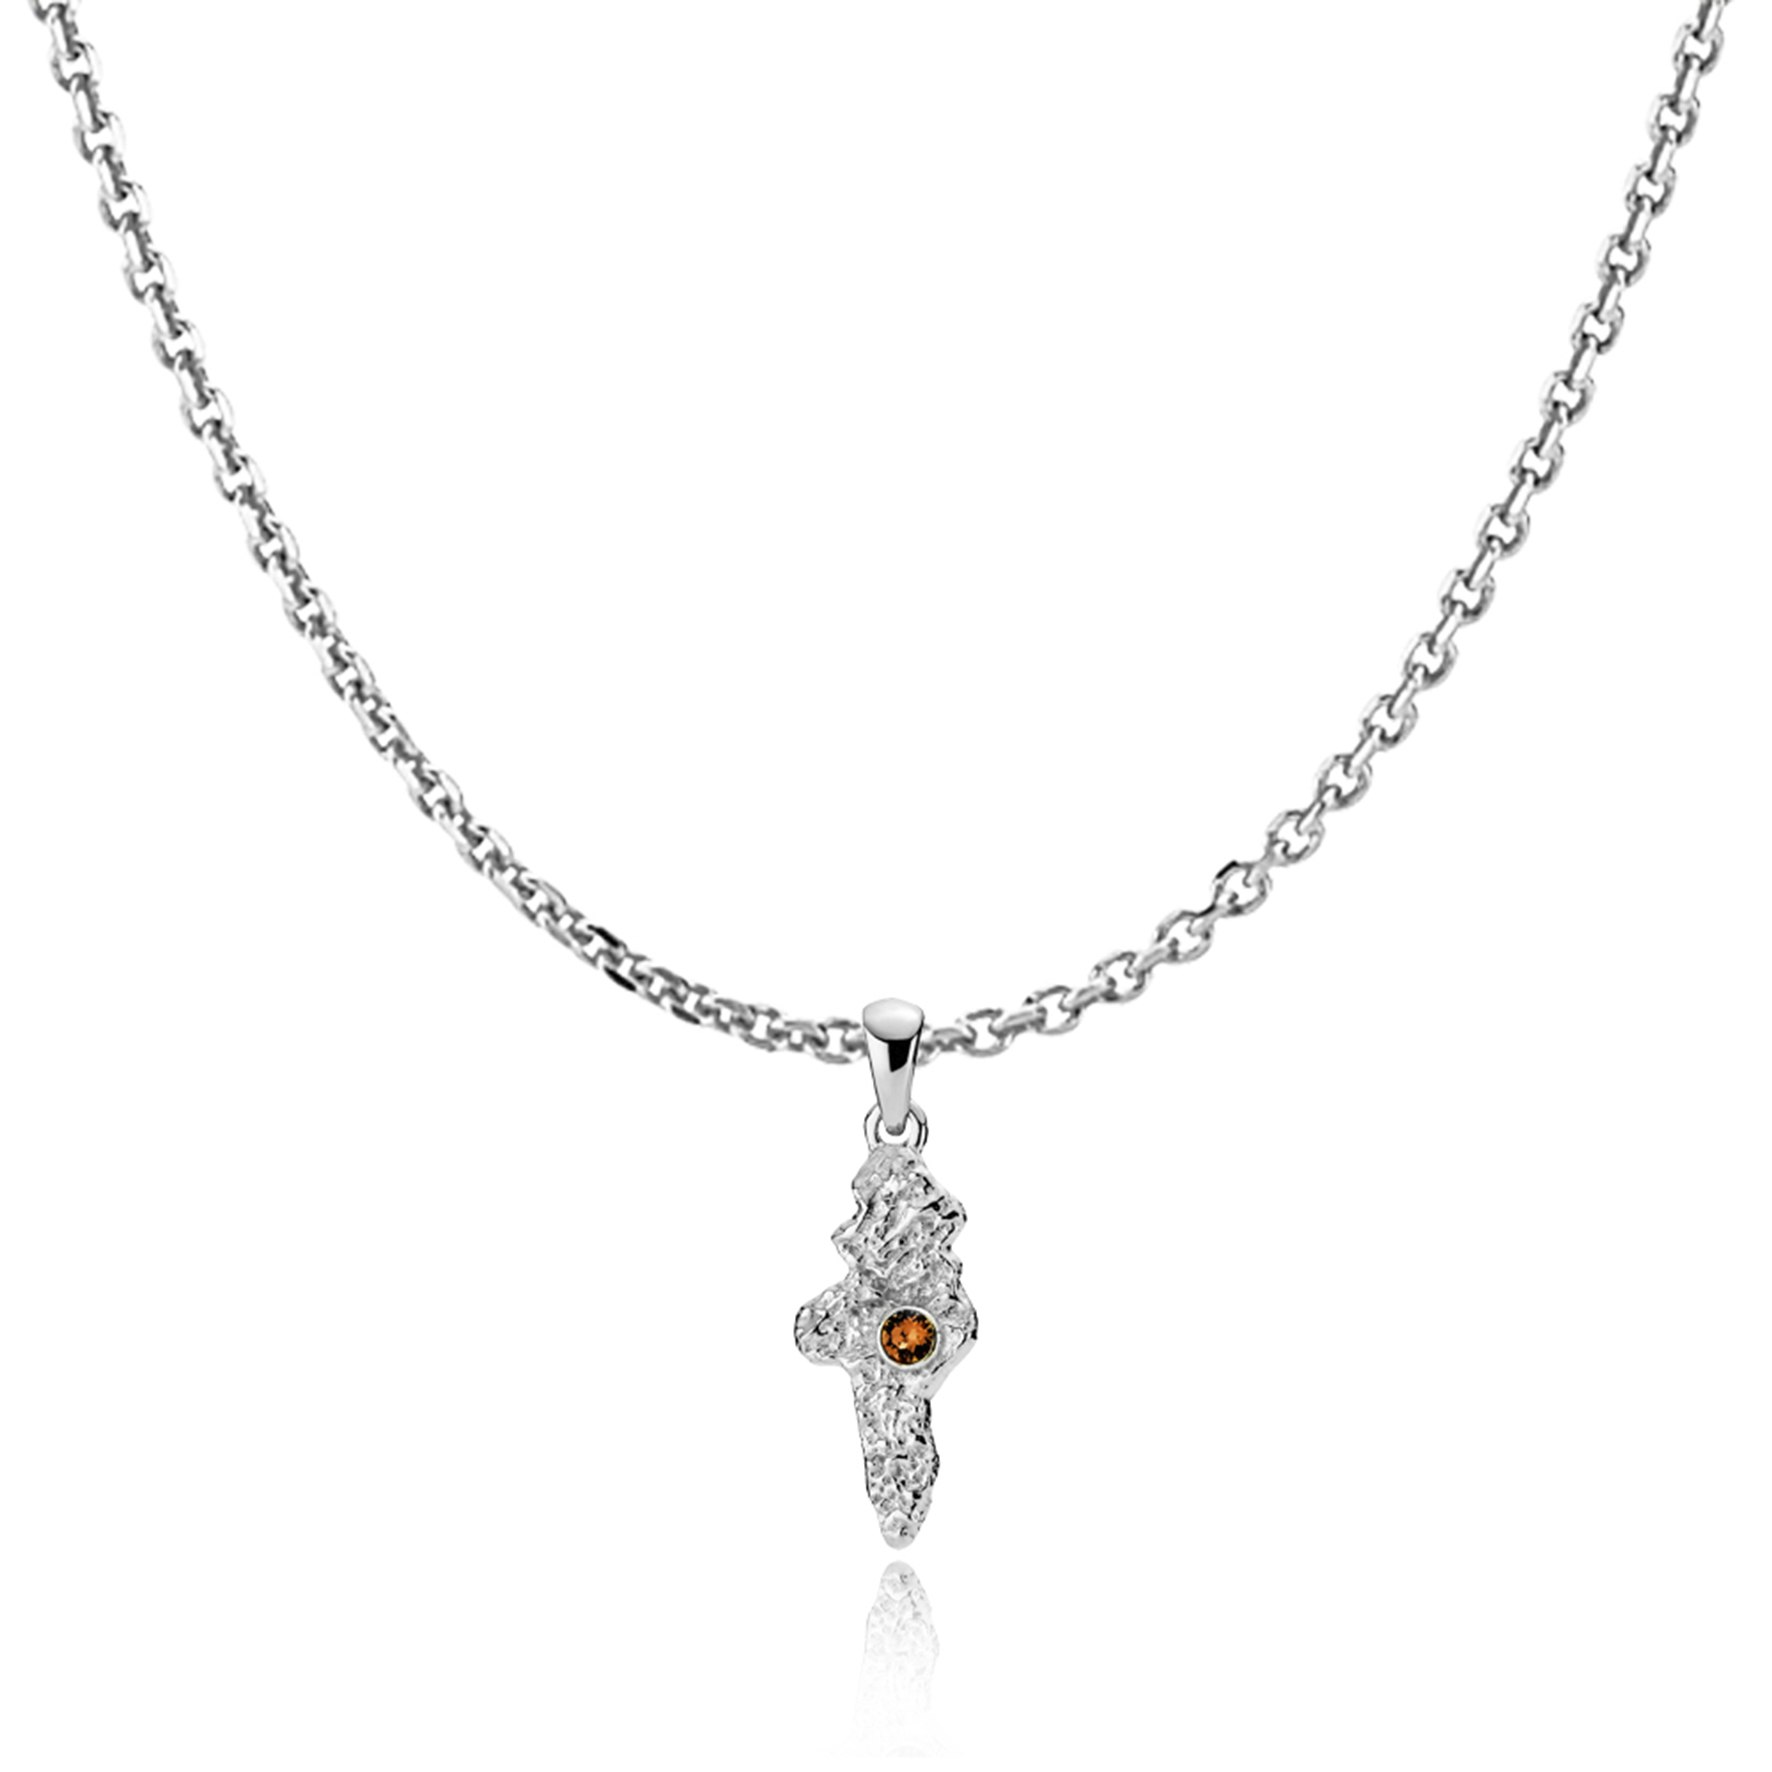 Silke By Sistie Pendant Necklace von Sistie in Silber Sterling 925